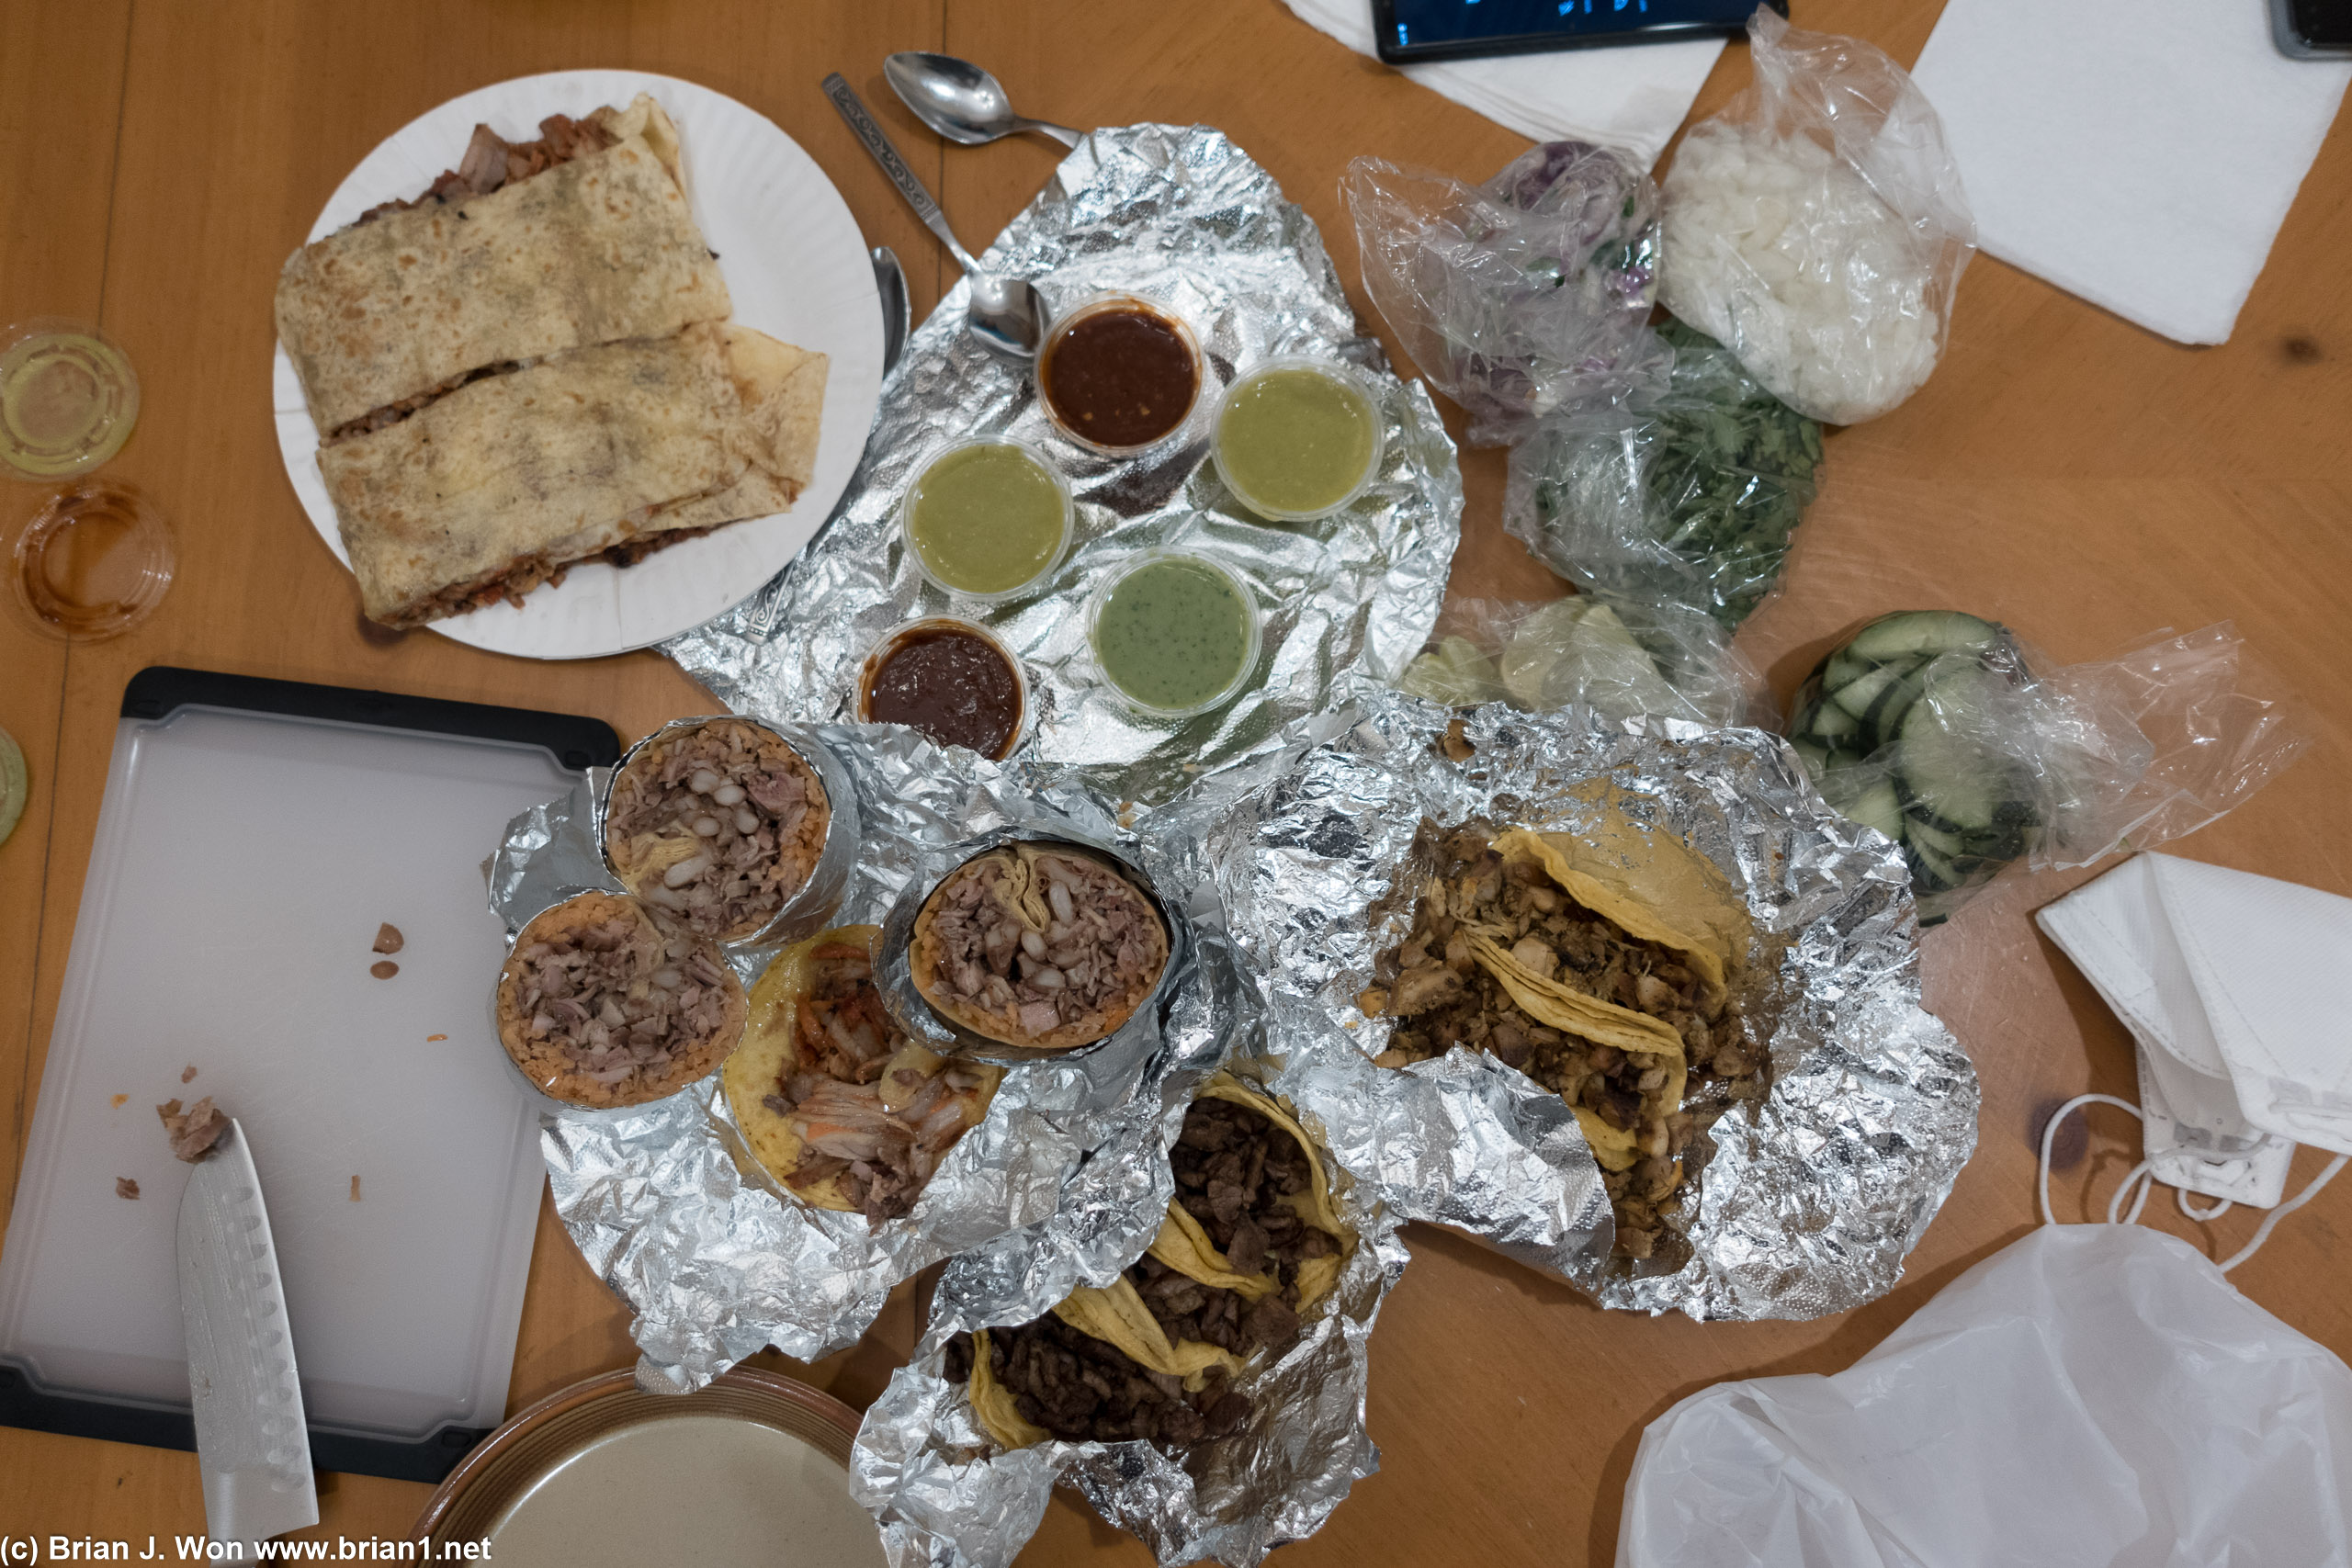 Al pastor quesadilla, buche burrito, carne asada, chicken, and al pastor tacos.